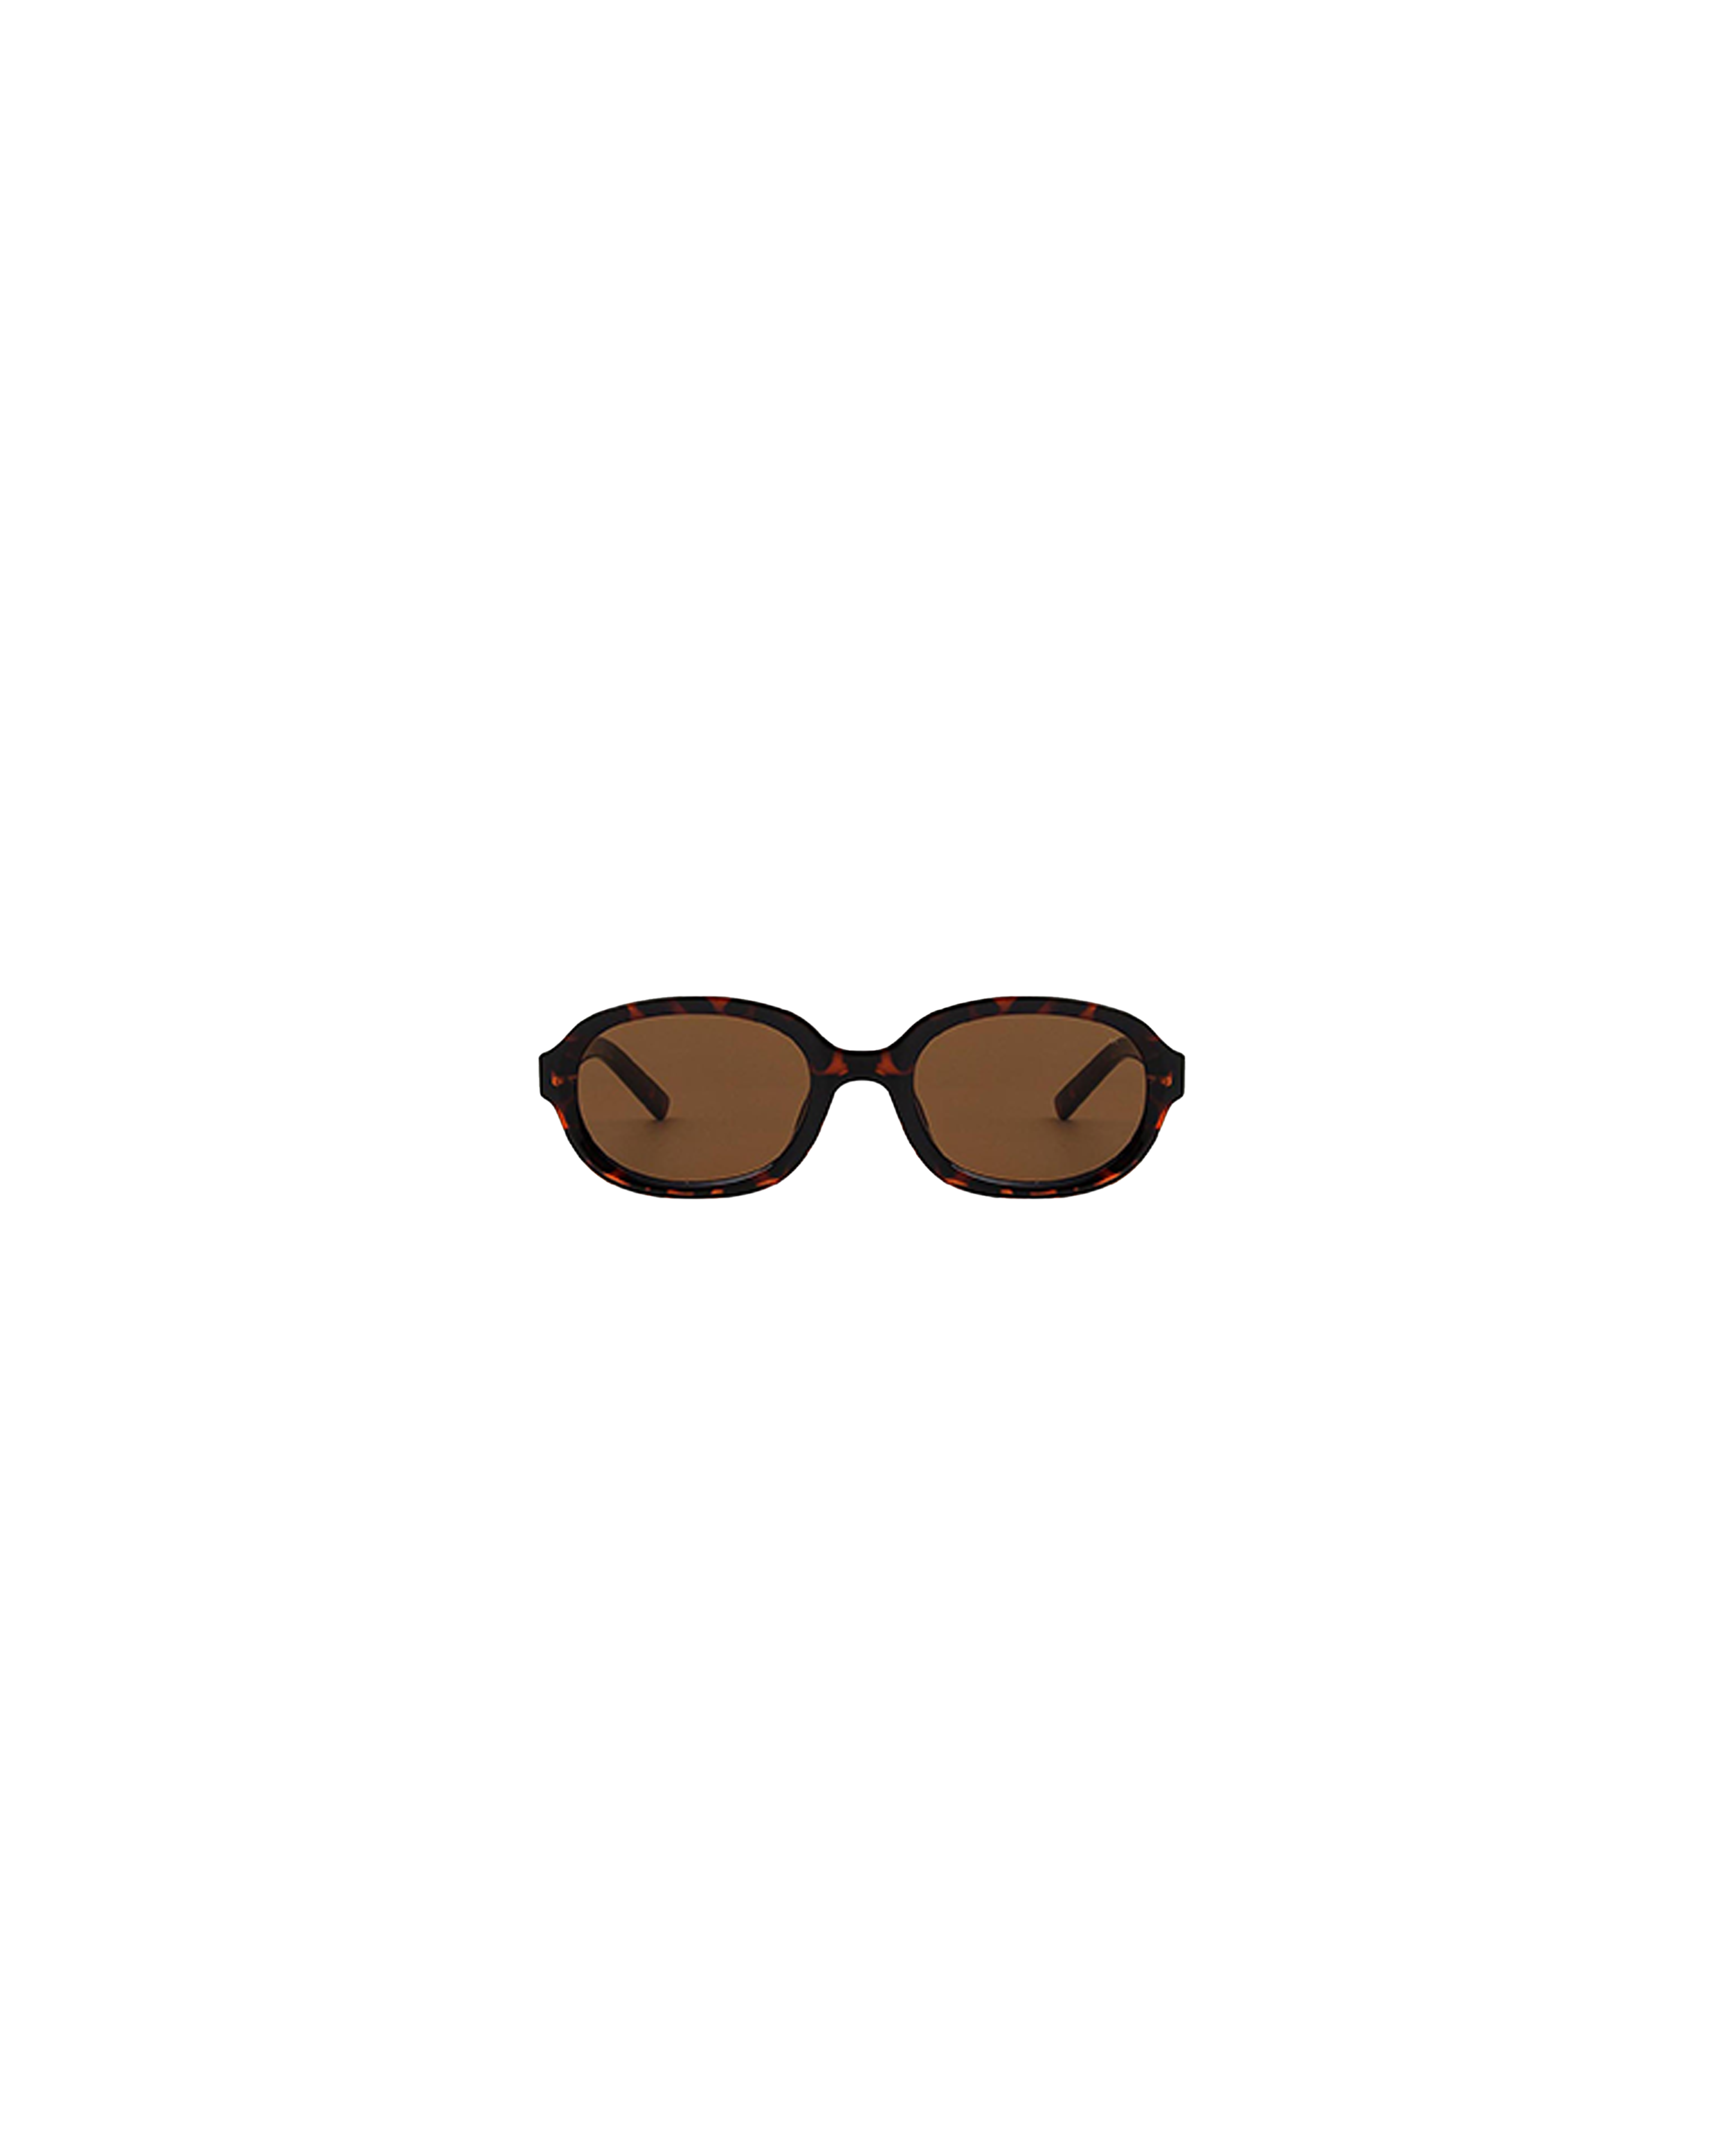 NV06 LB DZ7345 Sunglasses Frames by Nike